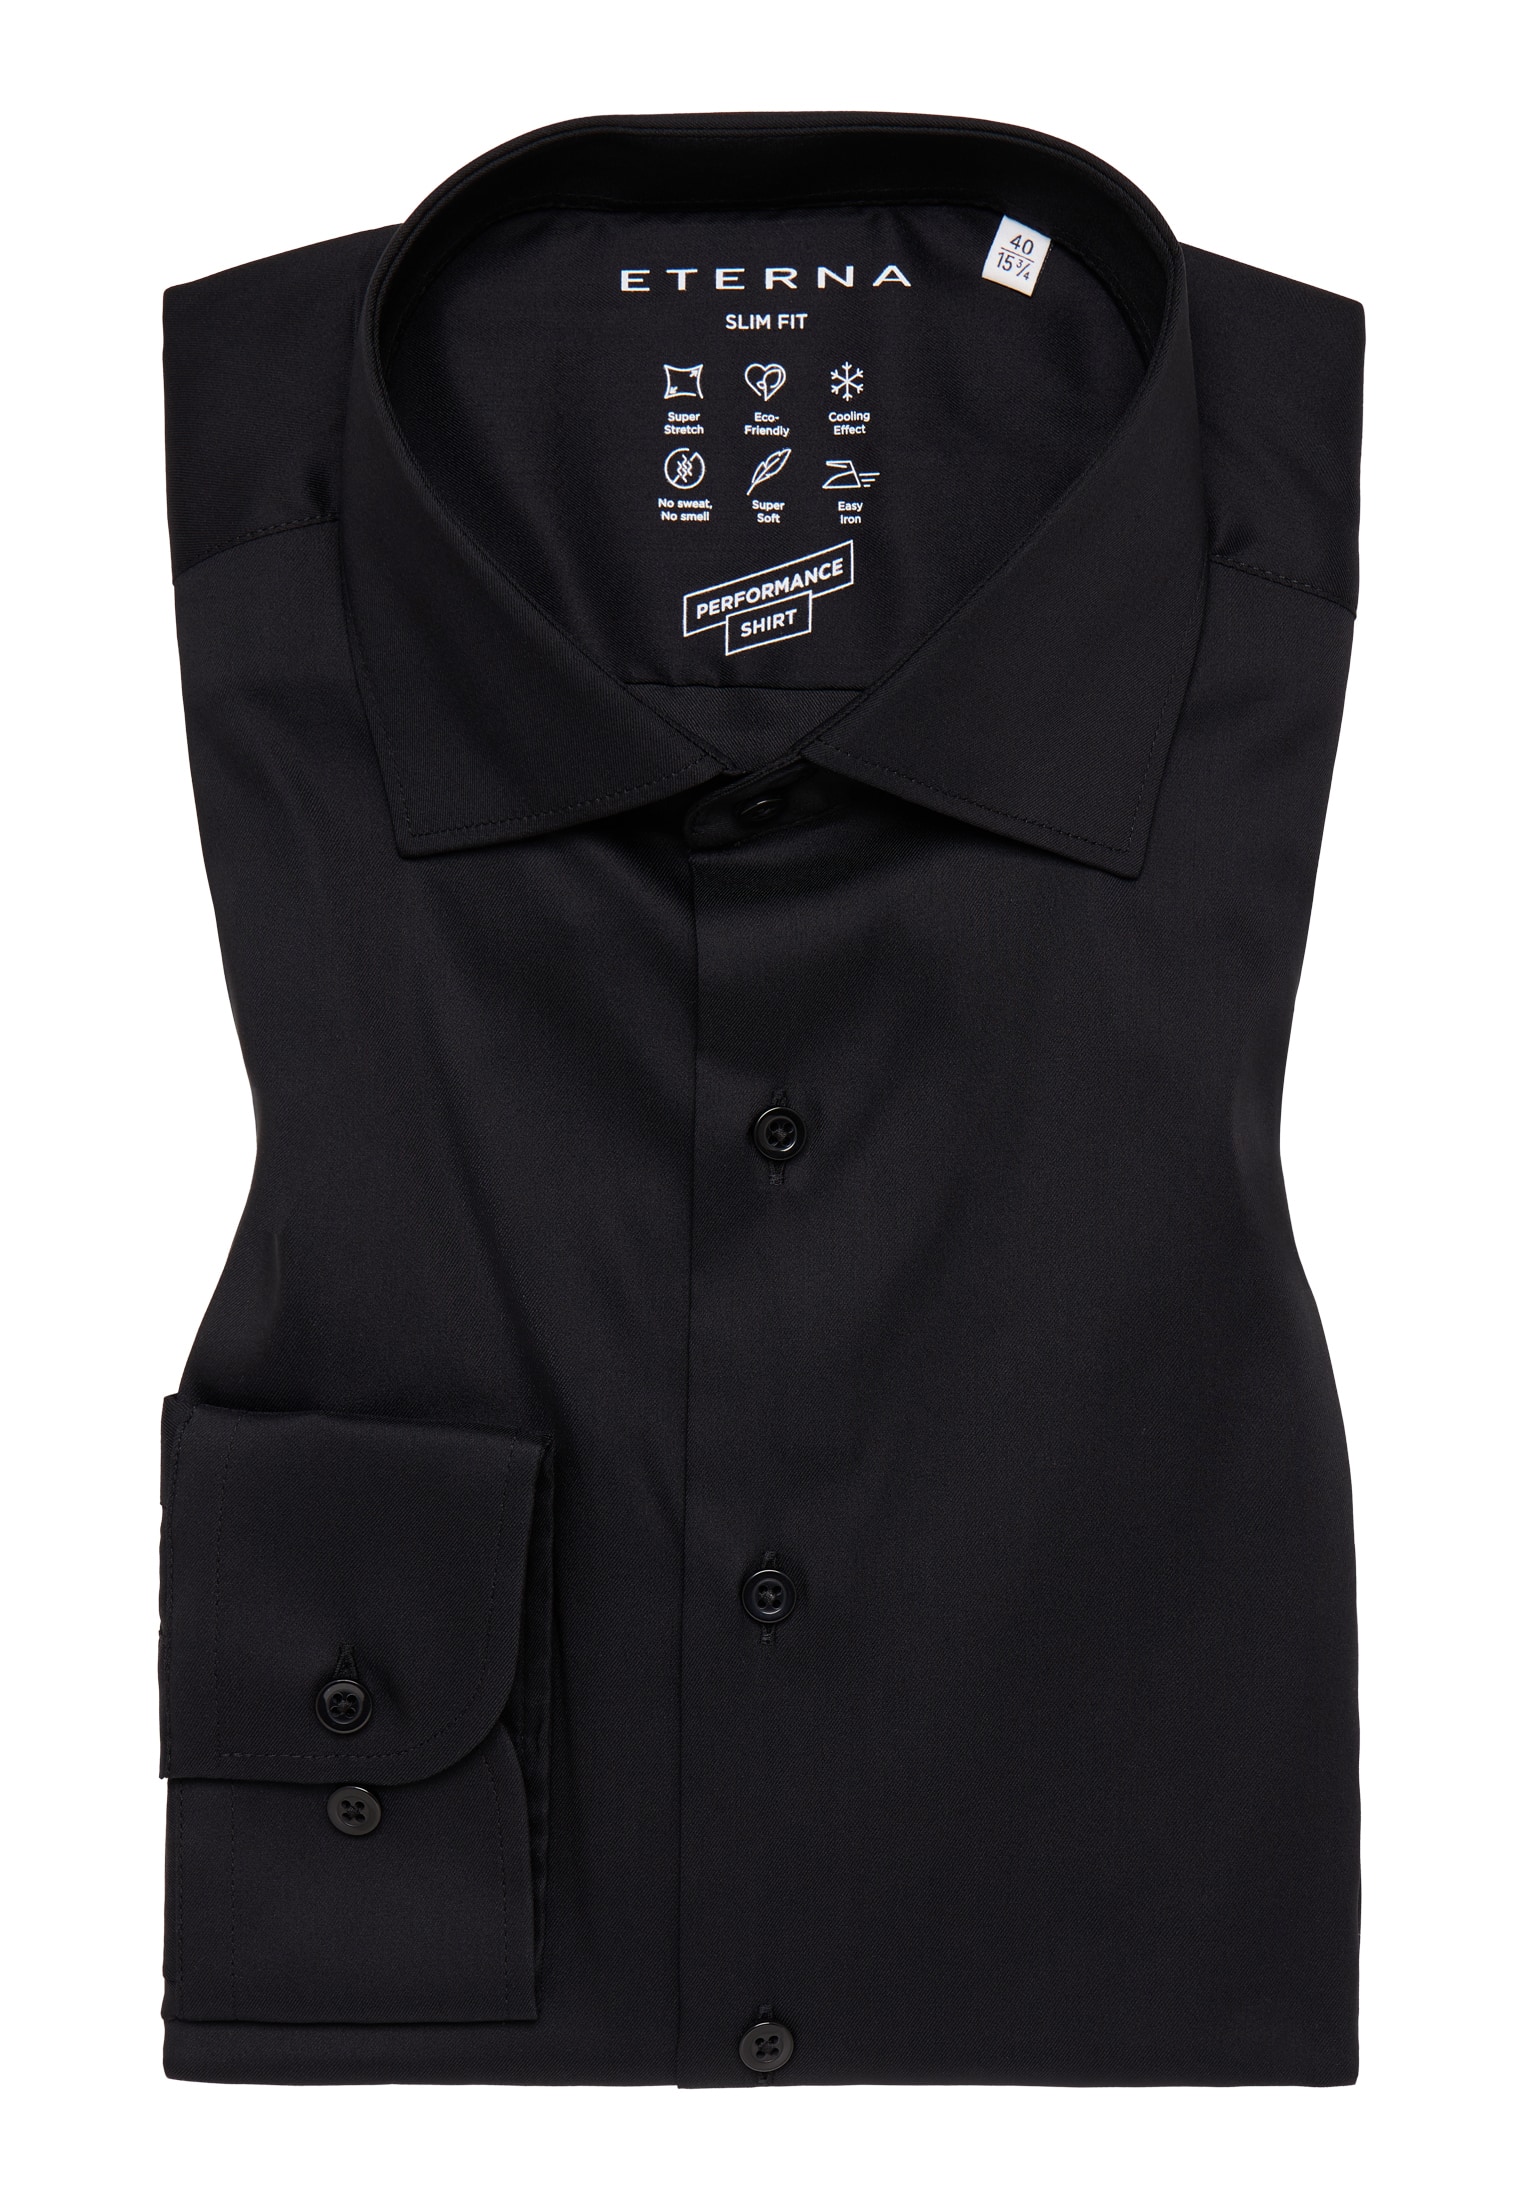 38 | | | long sleeve in SLIM FIT Performance | black 1SH02217-03-91-38-1/1 black plain Shirt